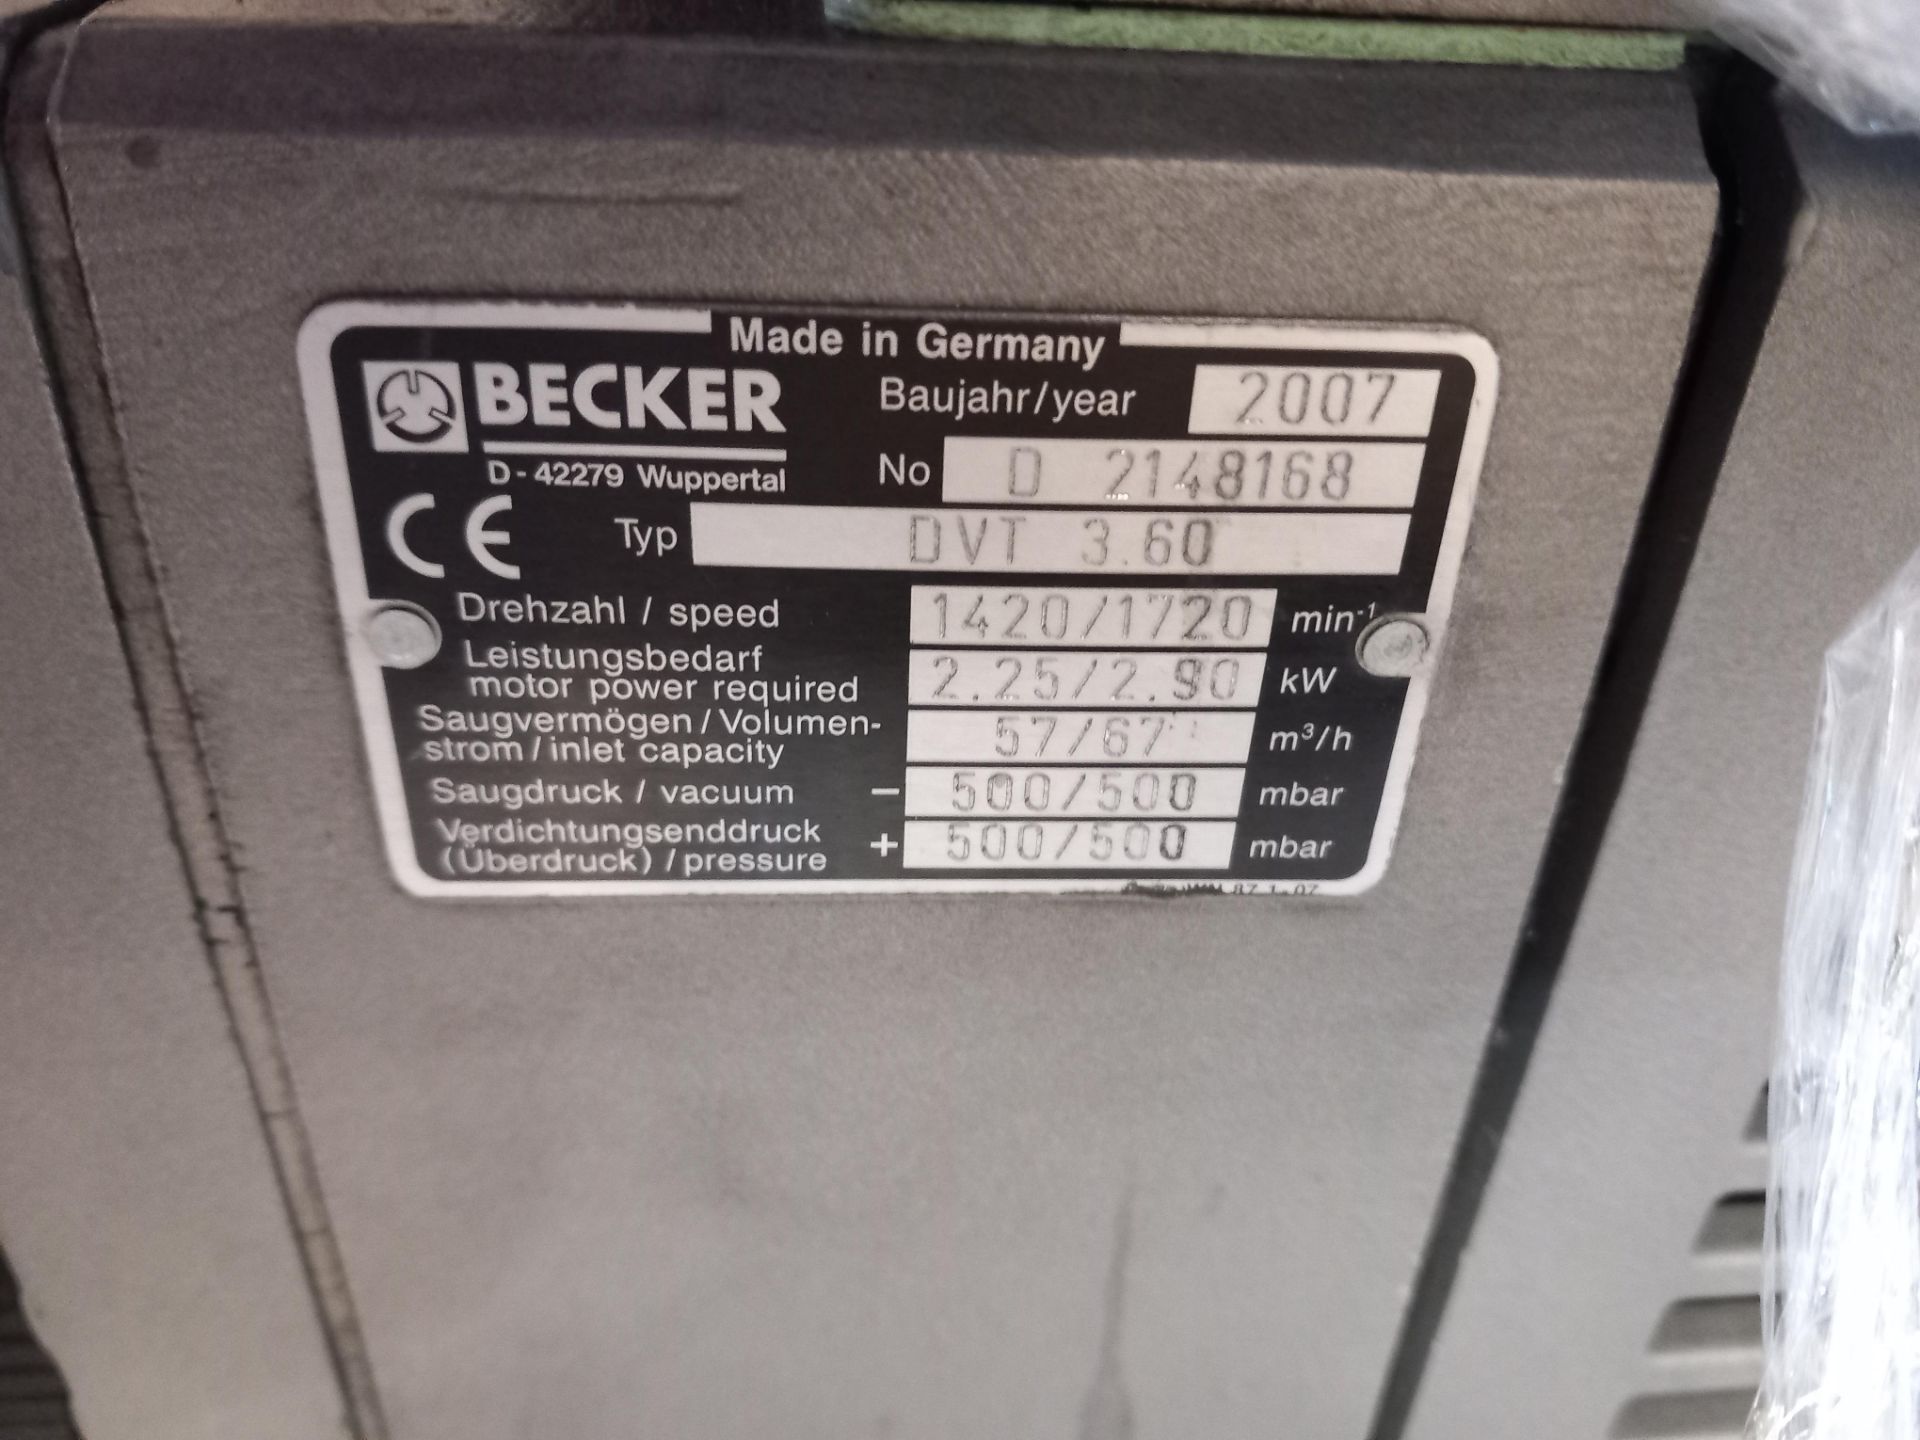 Becker DVT 3.60 vacuum pump (requires service) serial number D2148168 (2007) - Image 3 of 3